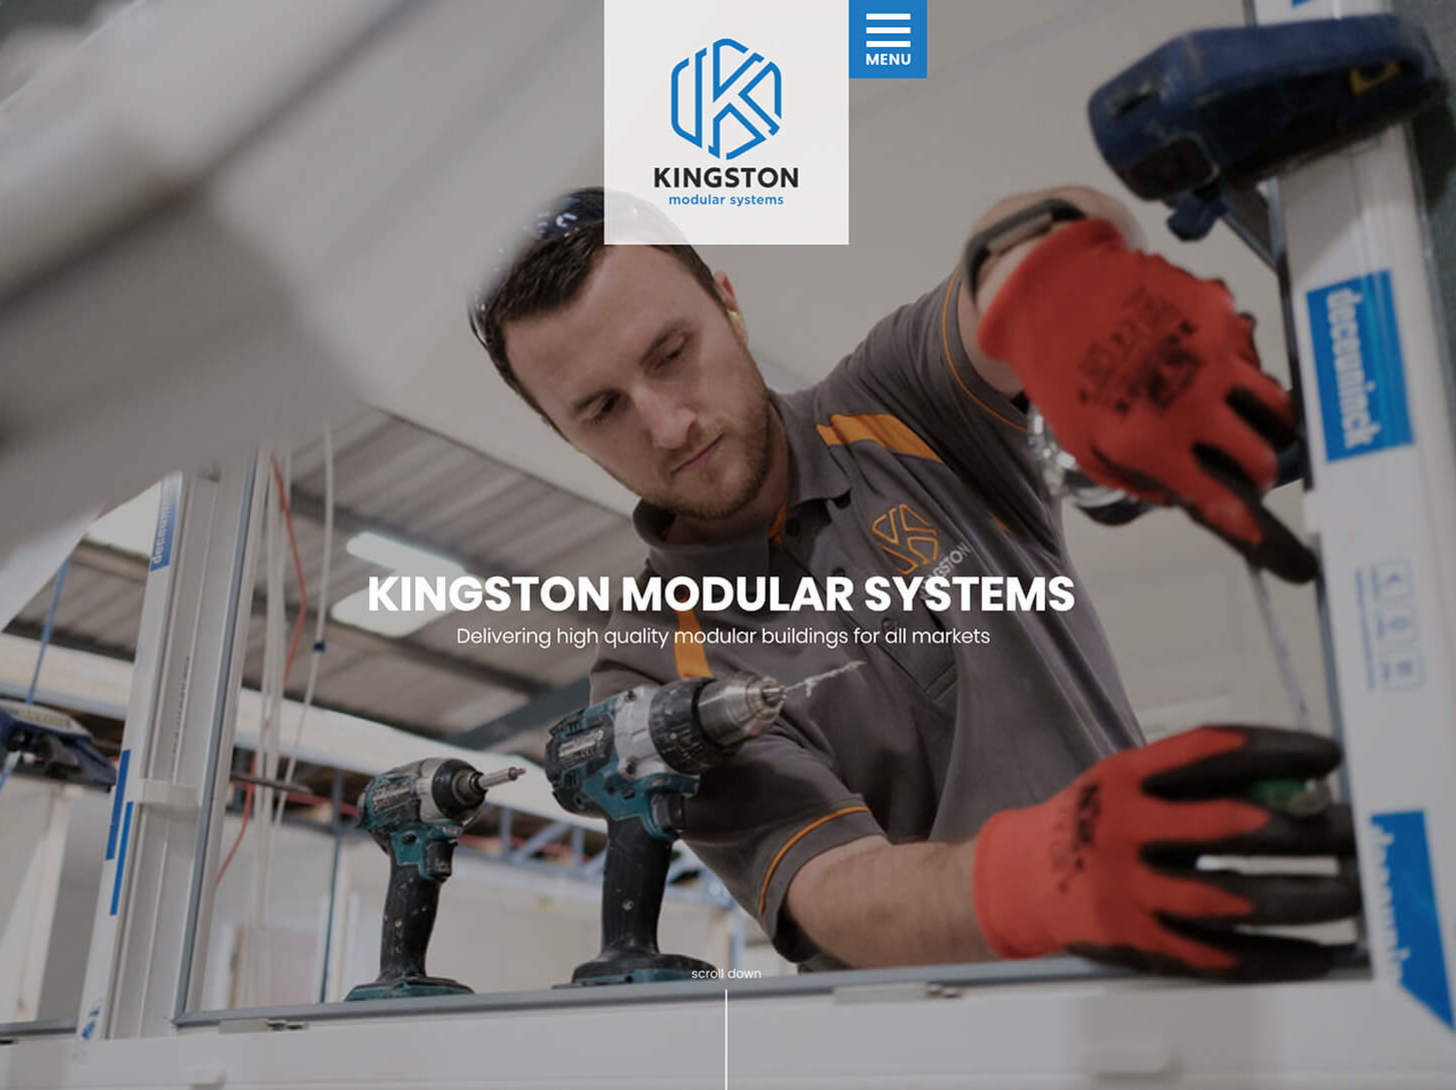 Kingston Modular Systems website